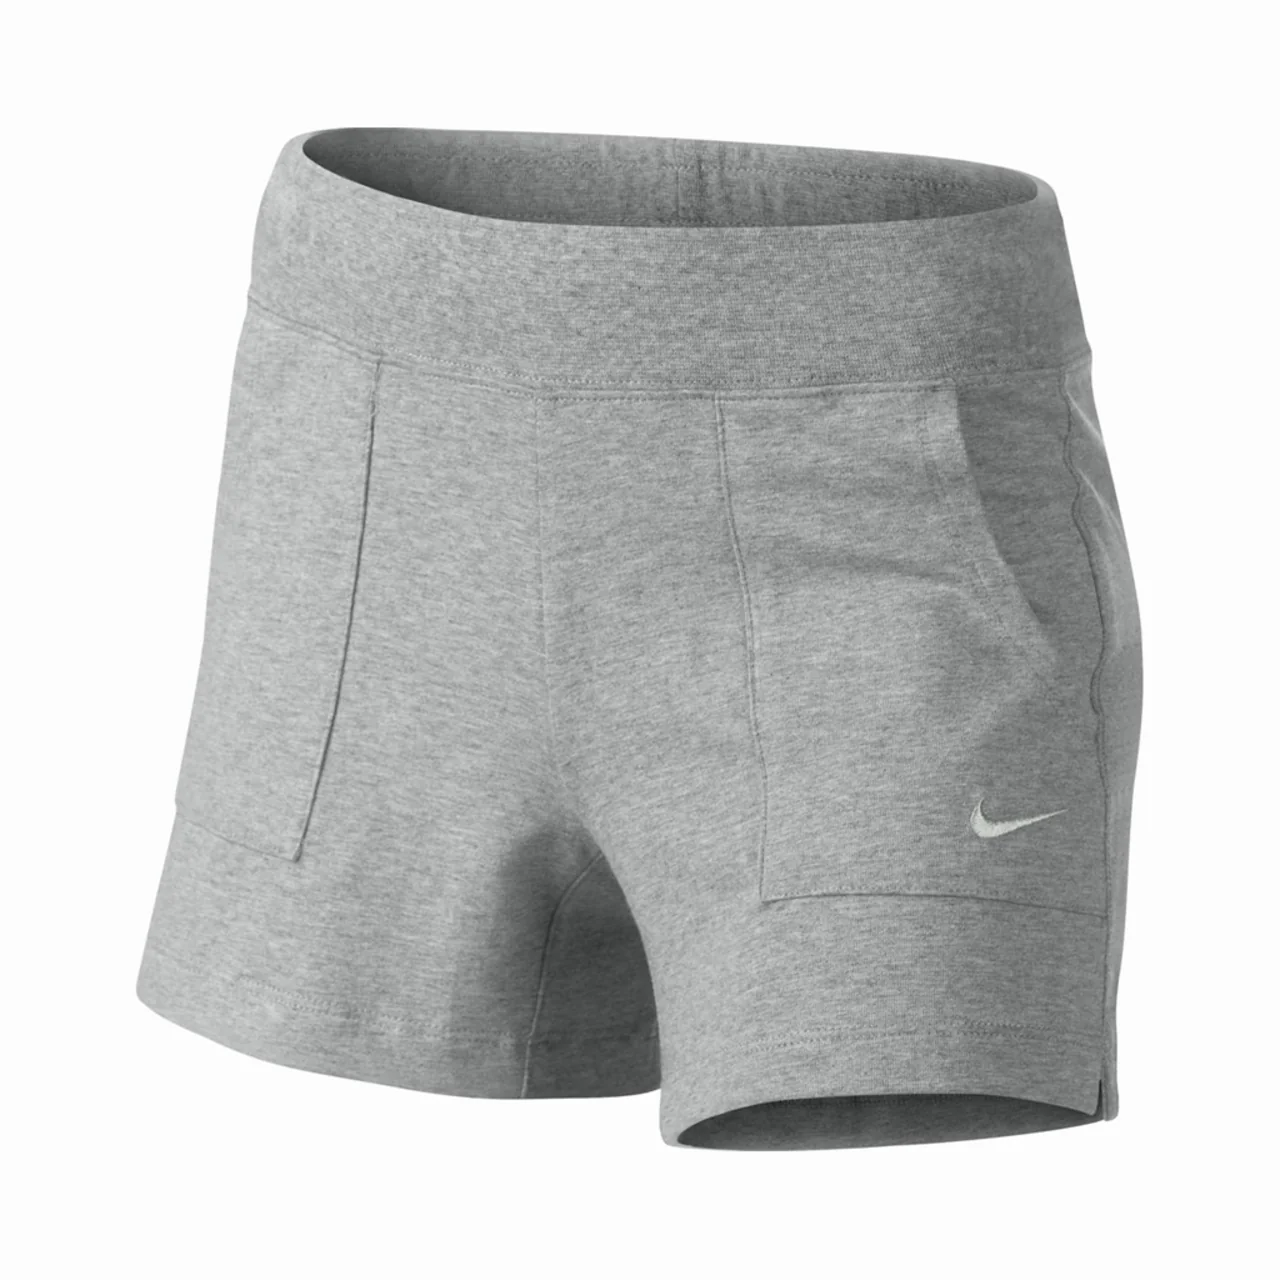 Nike Jersey Short Girl Grey Size 164cm